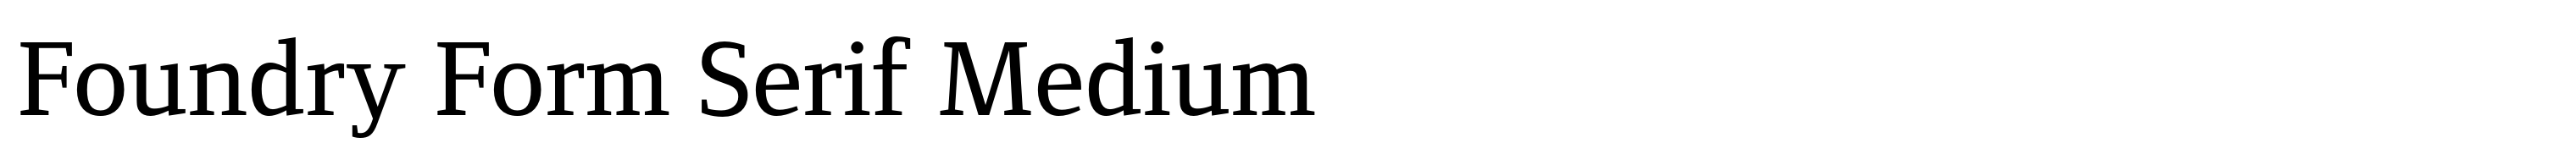 Foundry Form Serif Medium